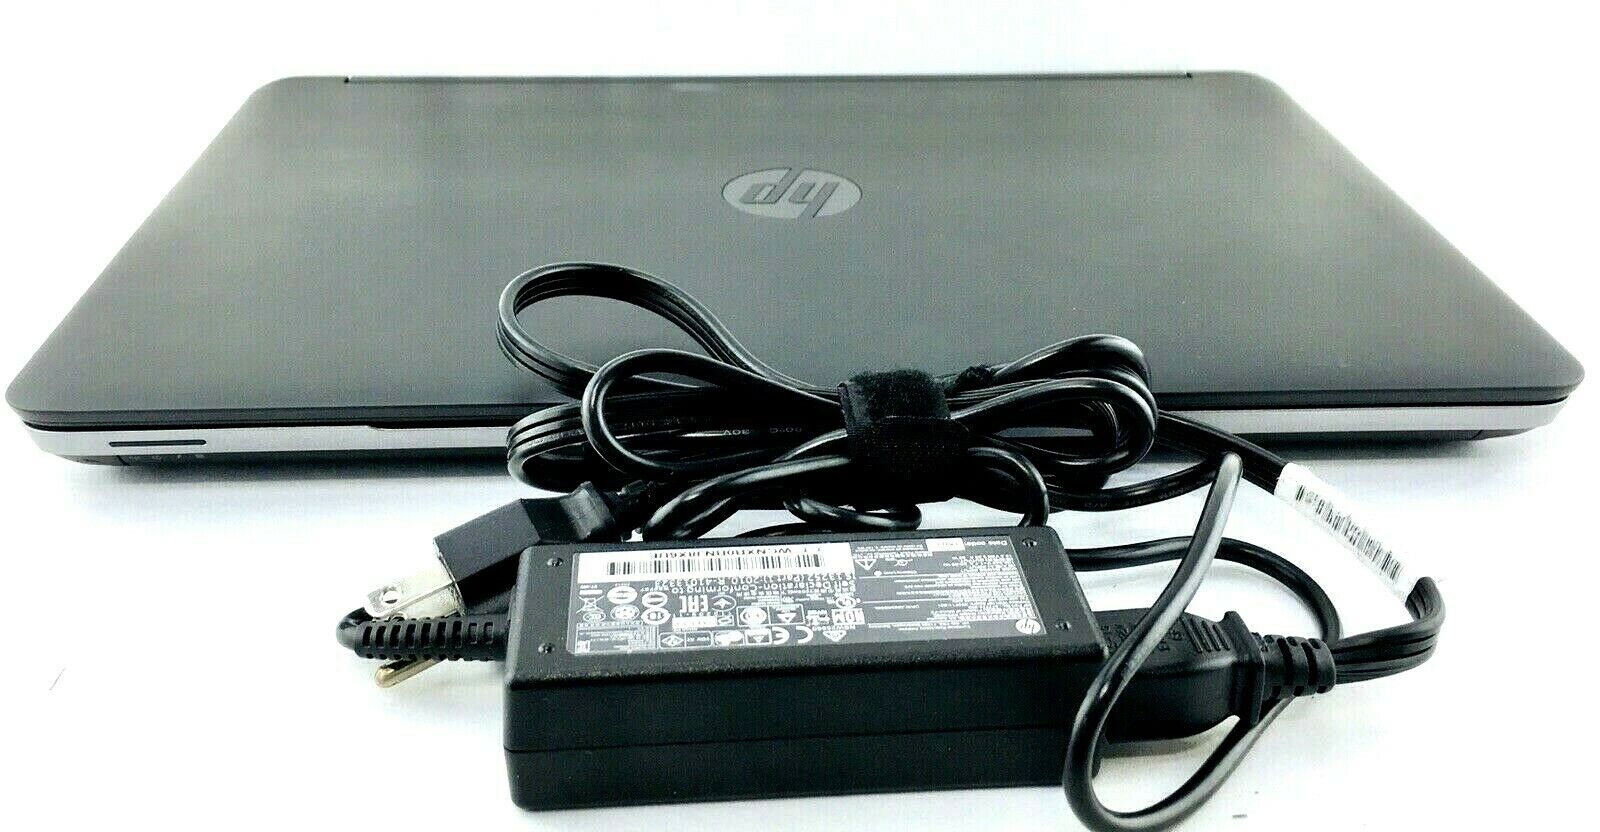 HP ProBook 650 G1 Laptop I5-4300M 2.60GHz 8GB 128GB SSD WIN 10 Pro Webcam